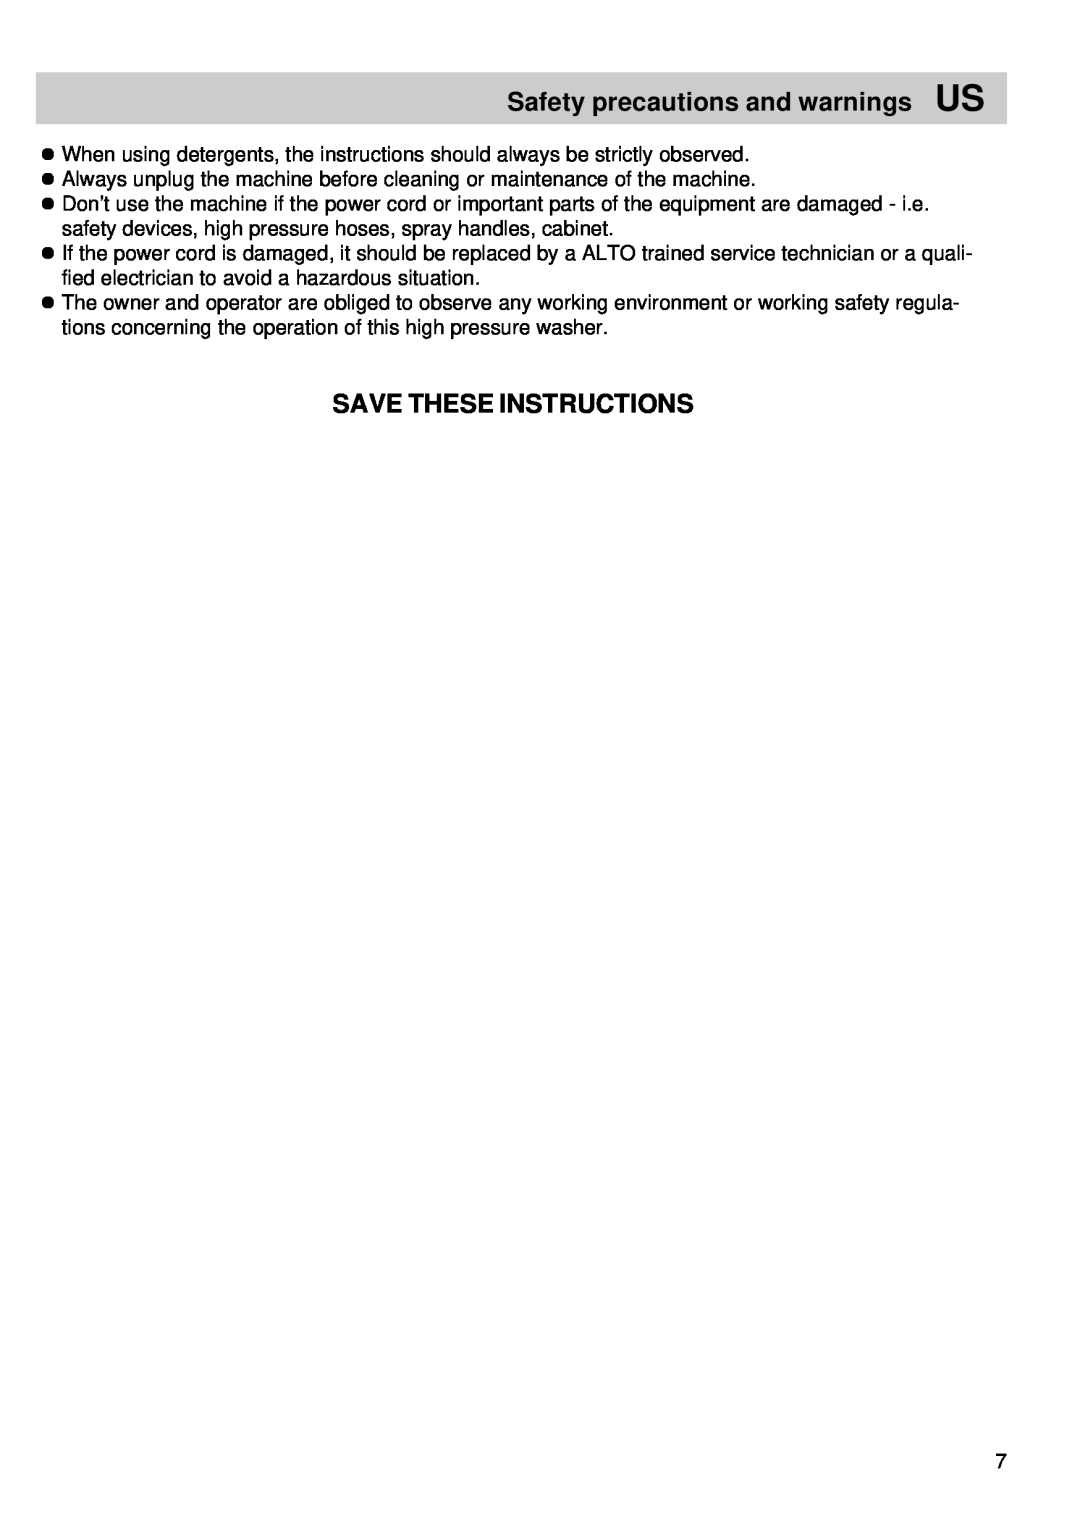 Alto-Shaam 52C3KSA -1, 52C3KSA -2 manual Save These Instructions, Safety precautions and warnings US 